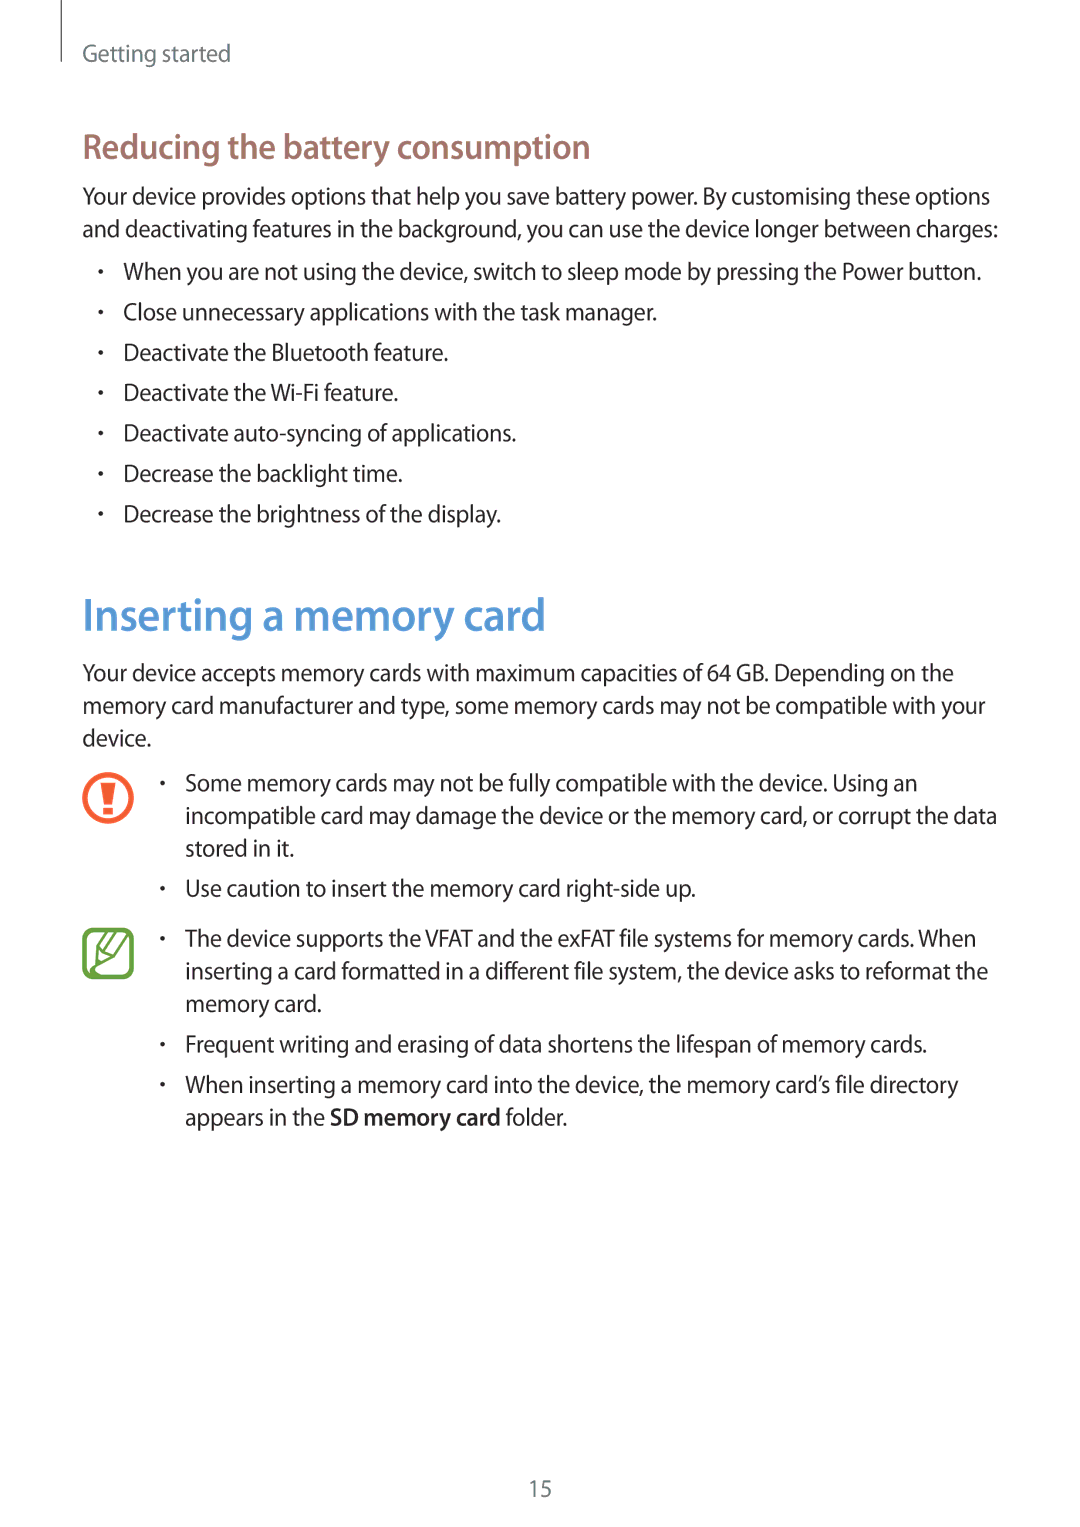 Samsung SM-G386FZWAITV, SM-G386FZKAPRT, SM-G386FZWADBT manual Inserting a memory card, Reducing the battery consumption 